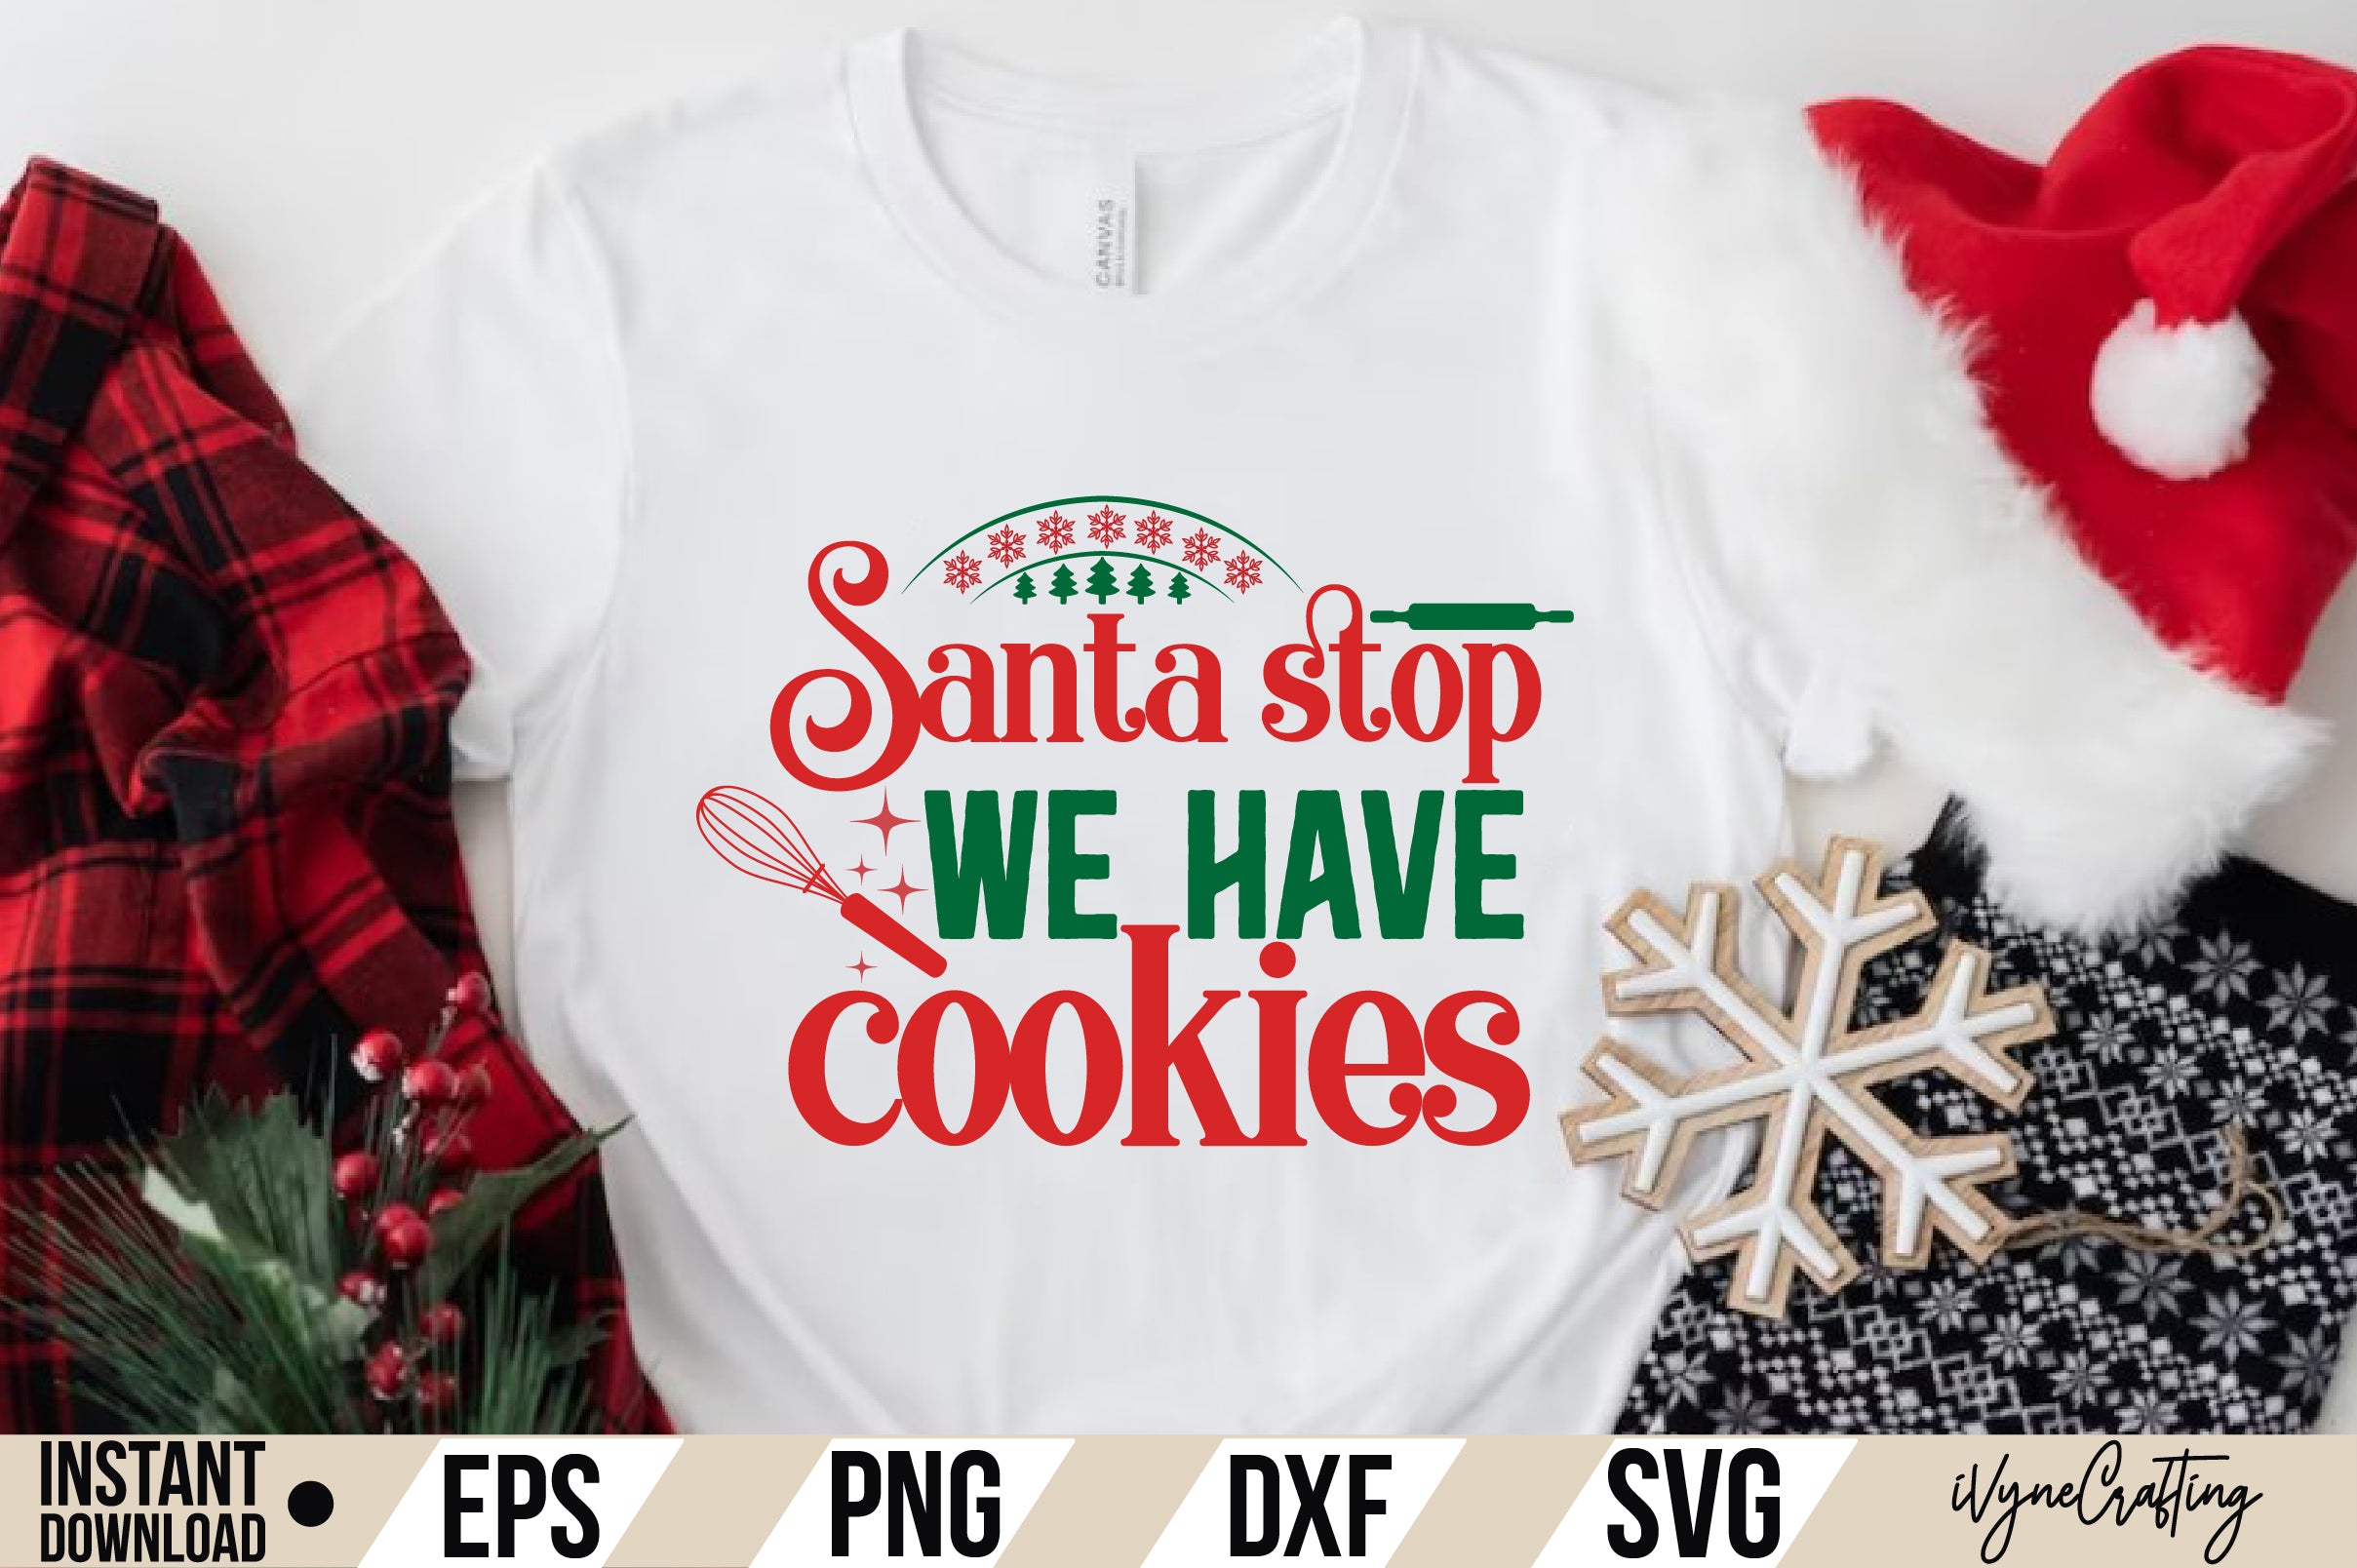 Santa stop we have cookies SVG Cut File